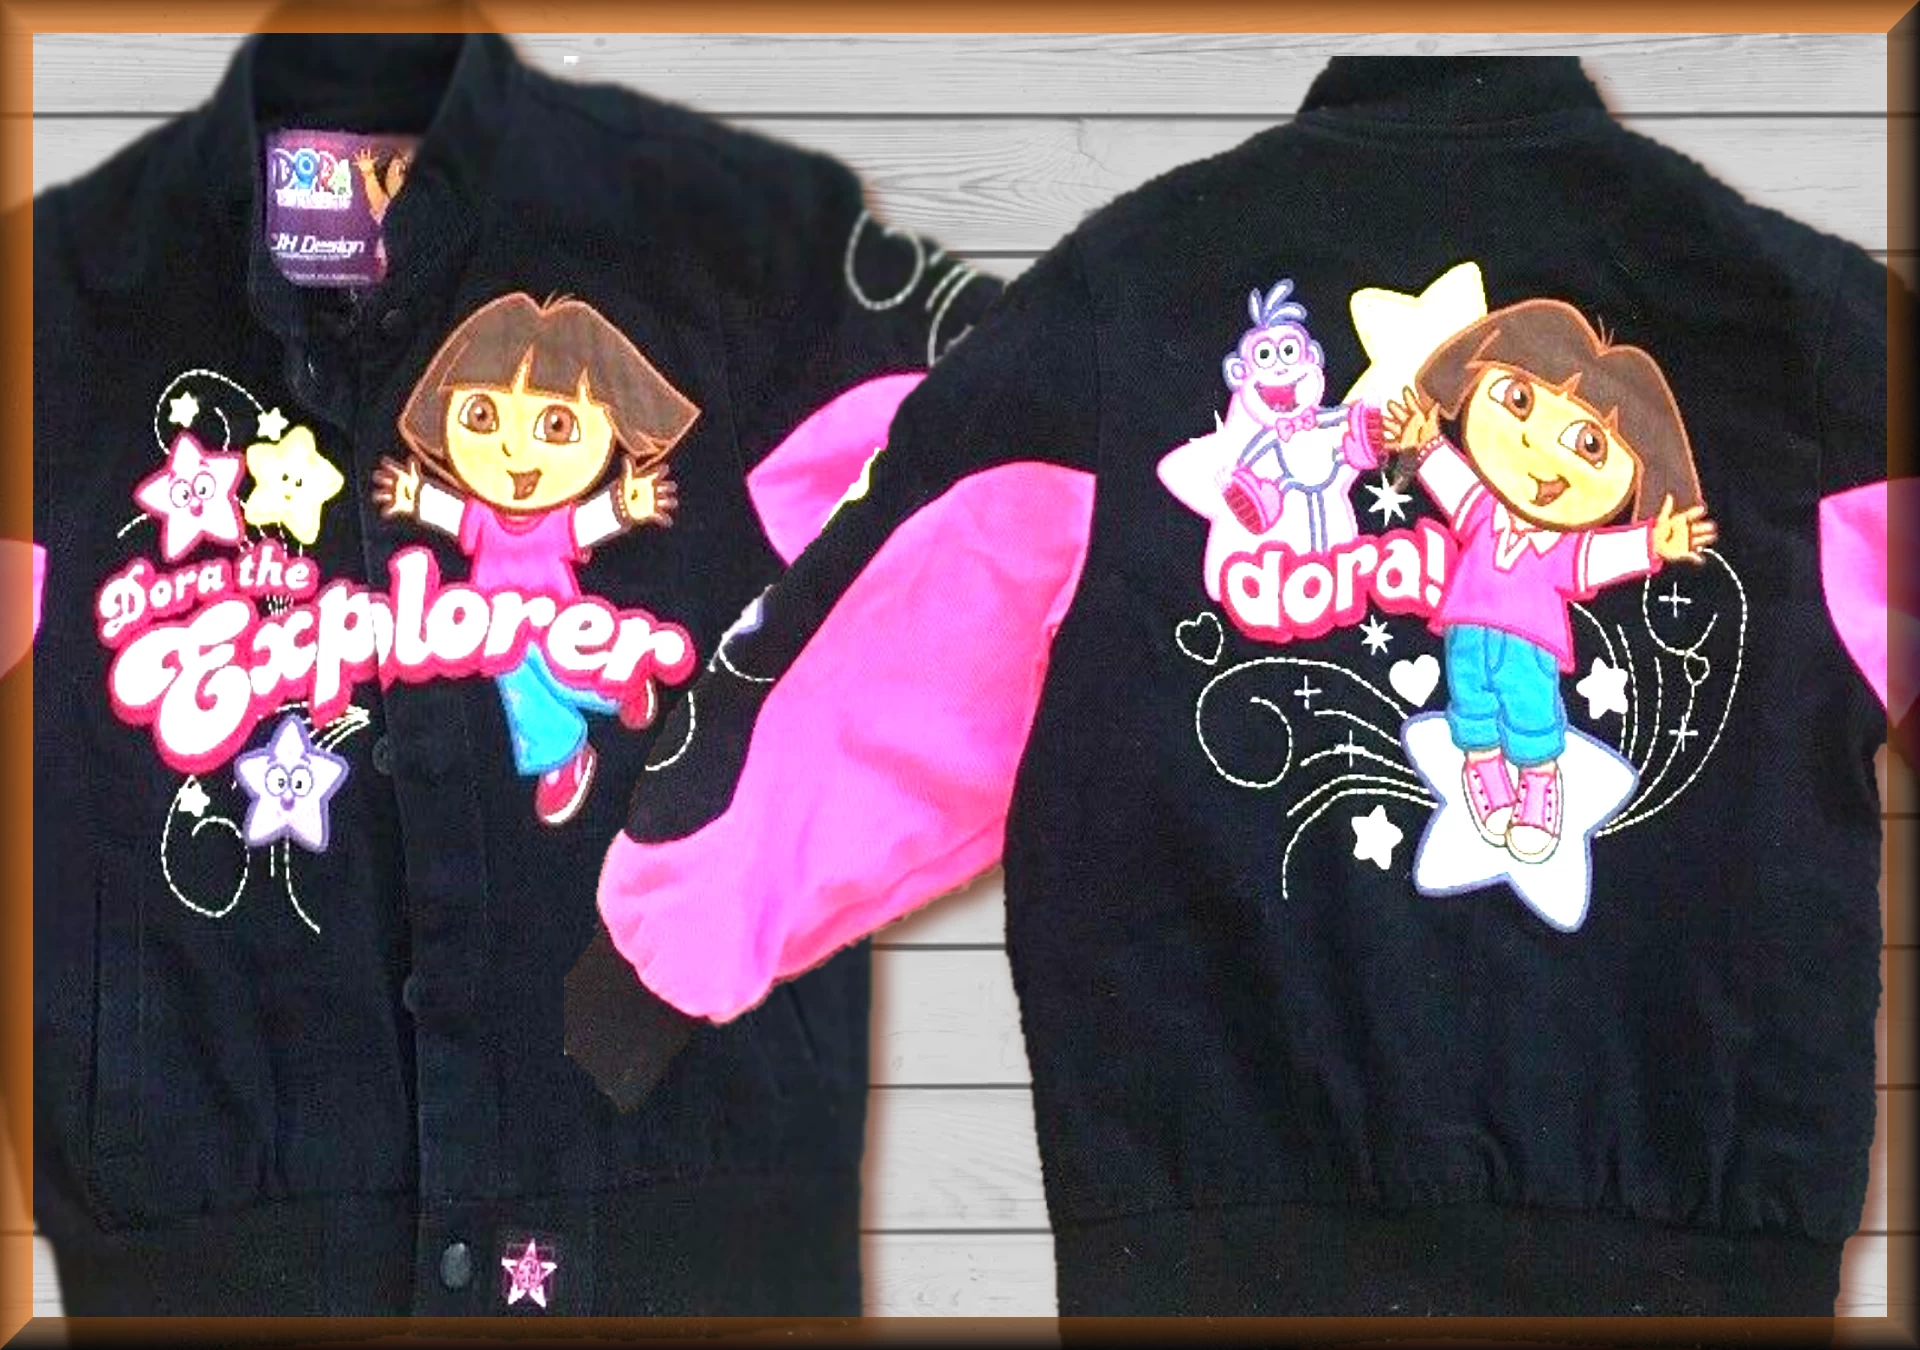 Dora Black Cartoon Character Kids Jacket by JH Design - $